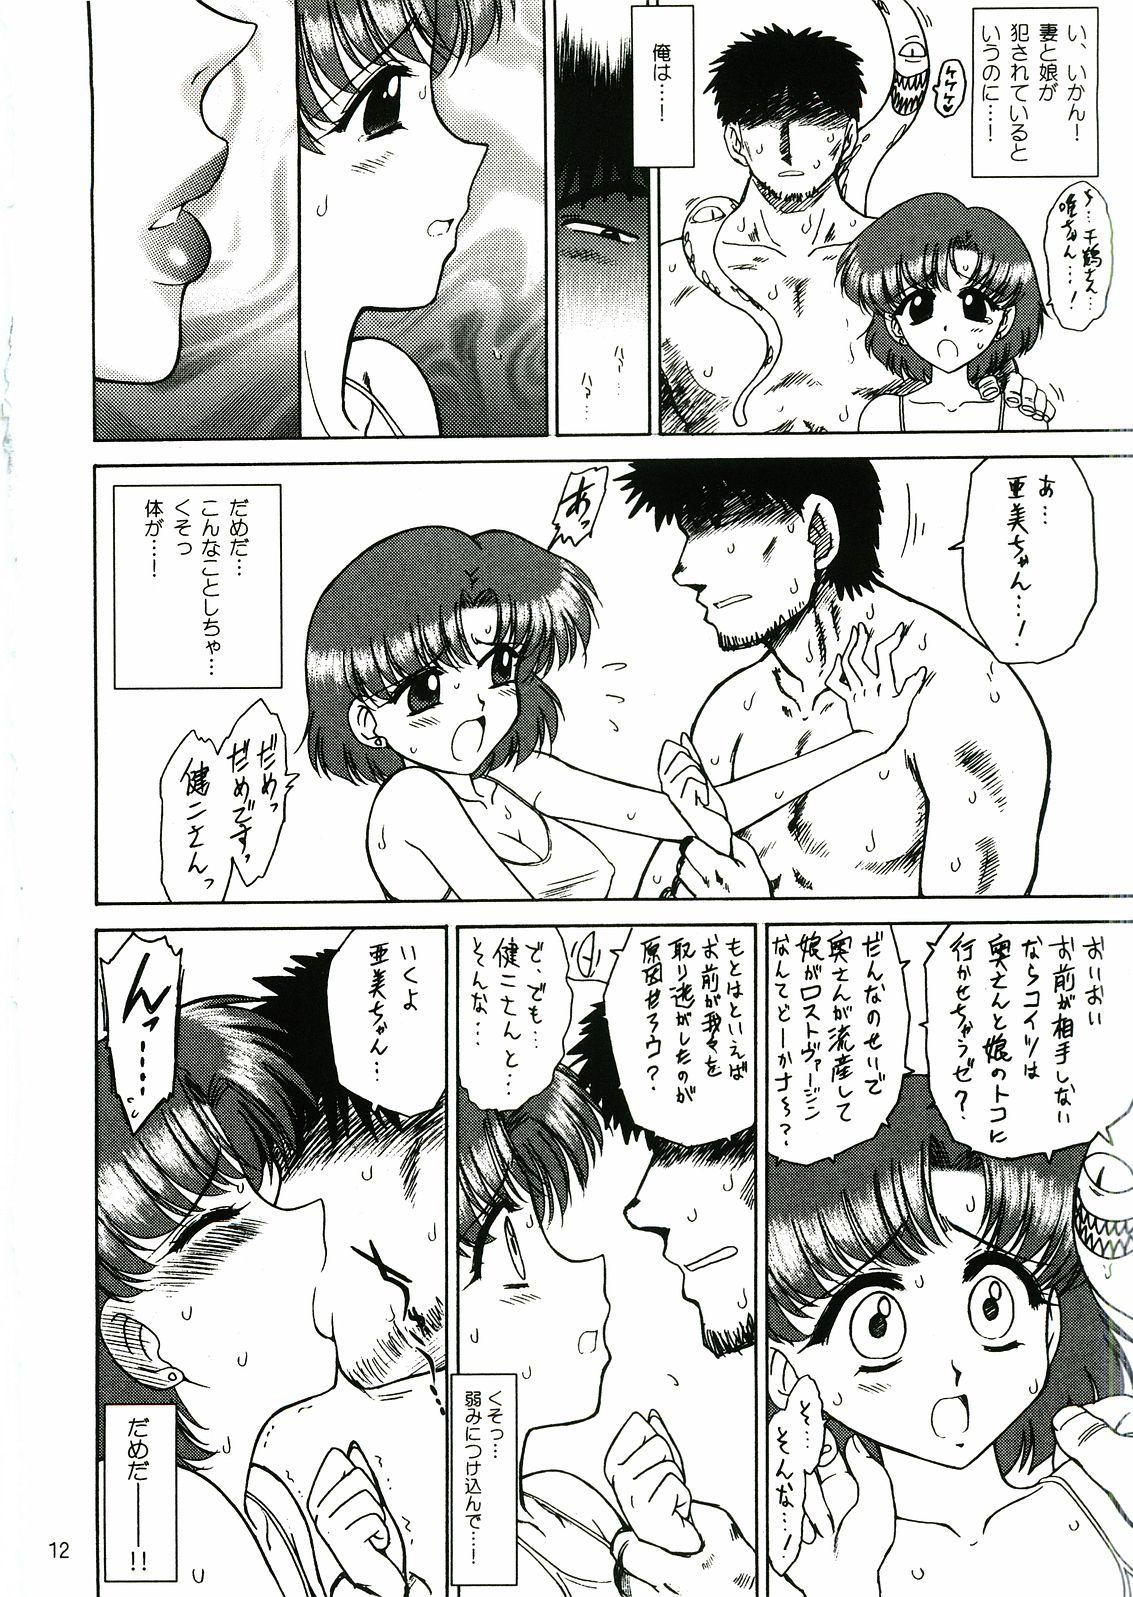 4some Aqua Necklace - Sailor moon Pene - Page 11